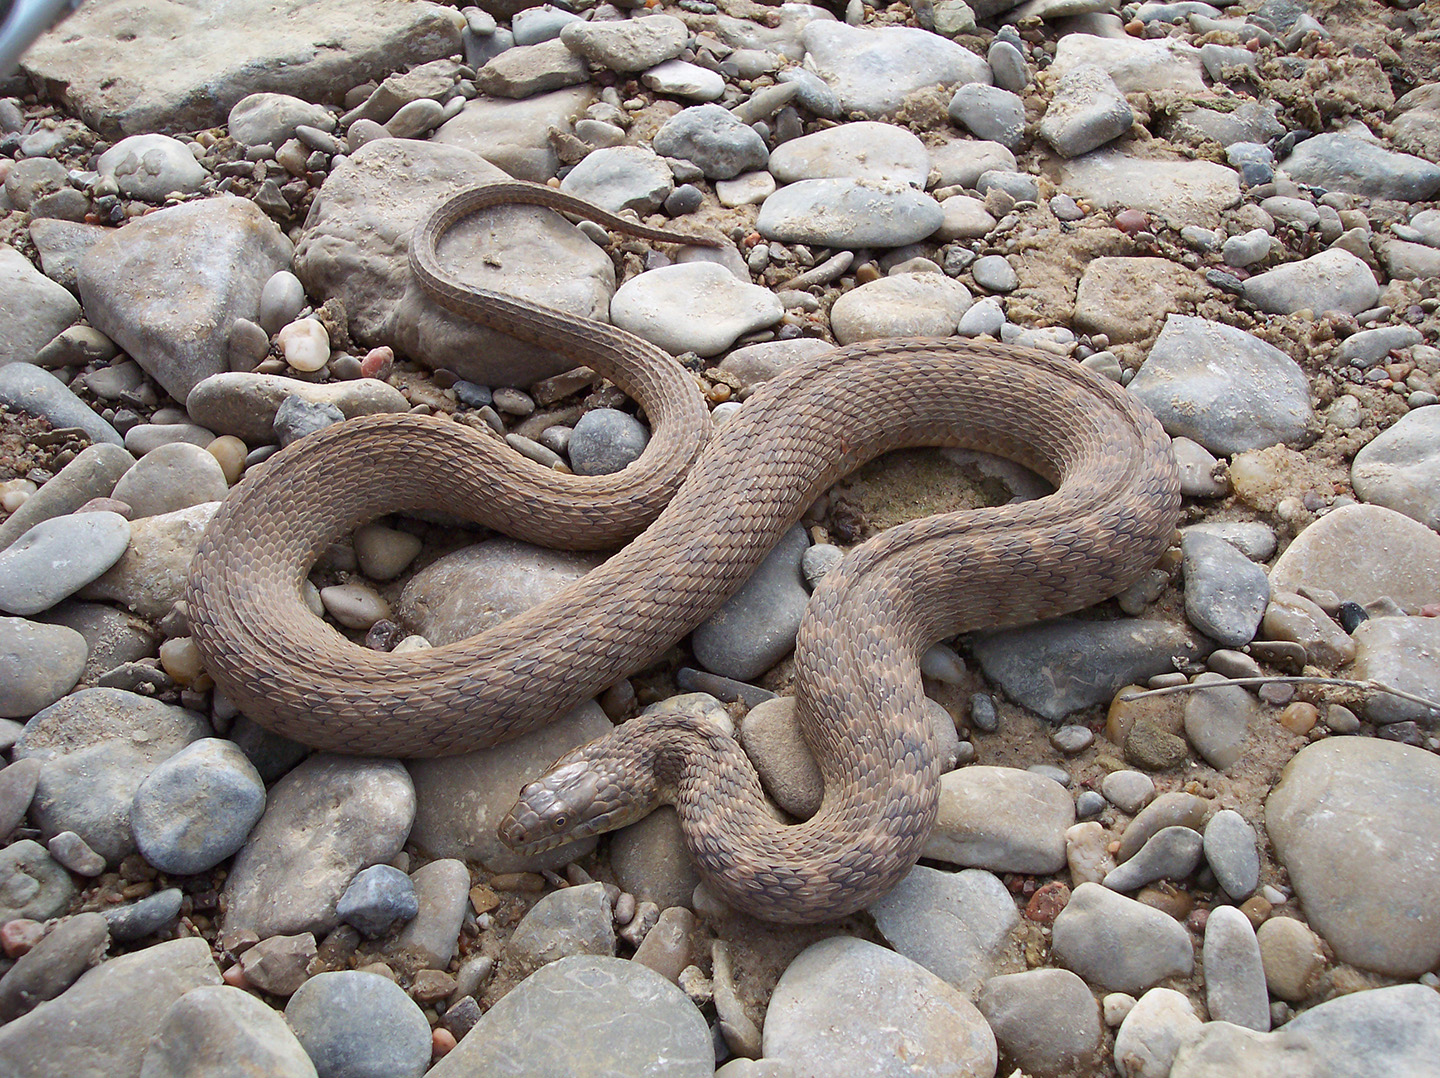 Brazos Water Snake image courtesy of Dustin McBride